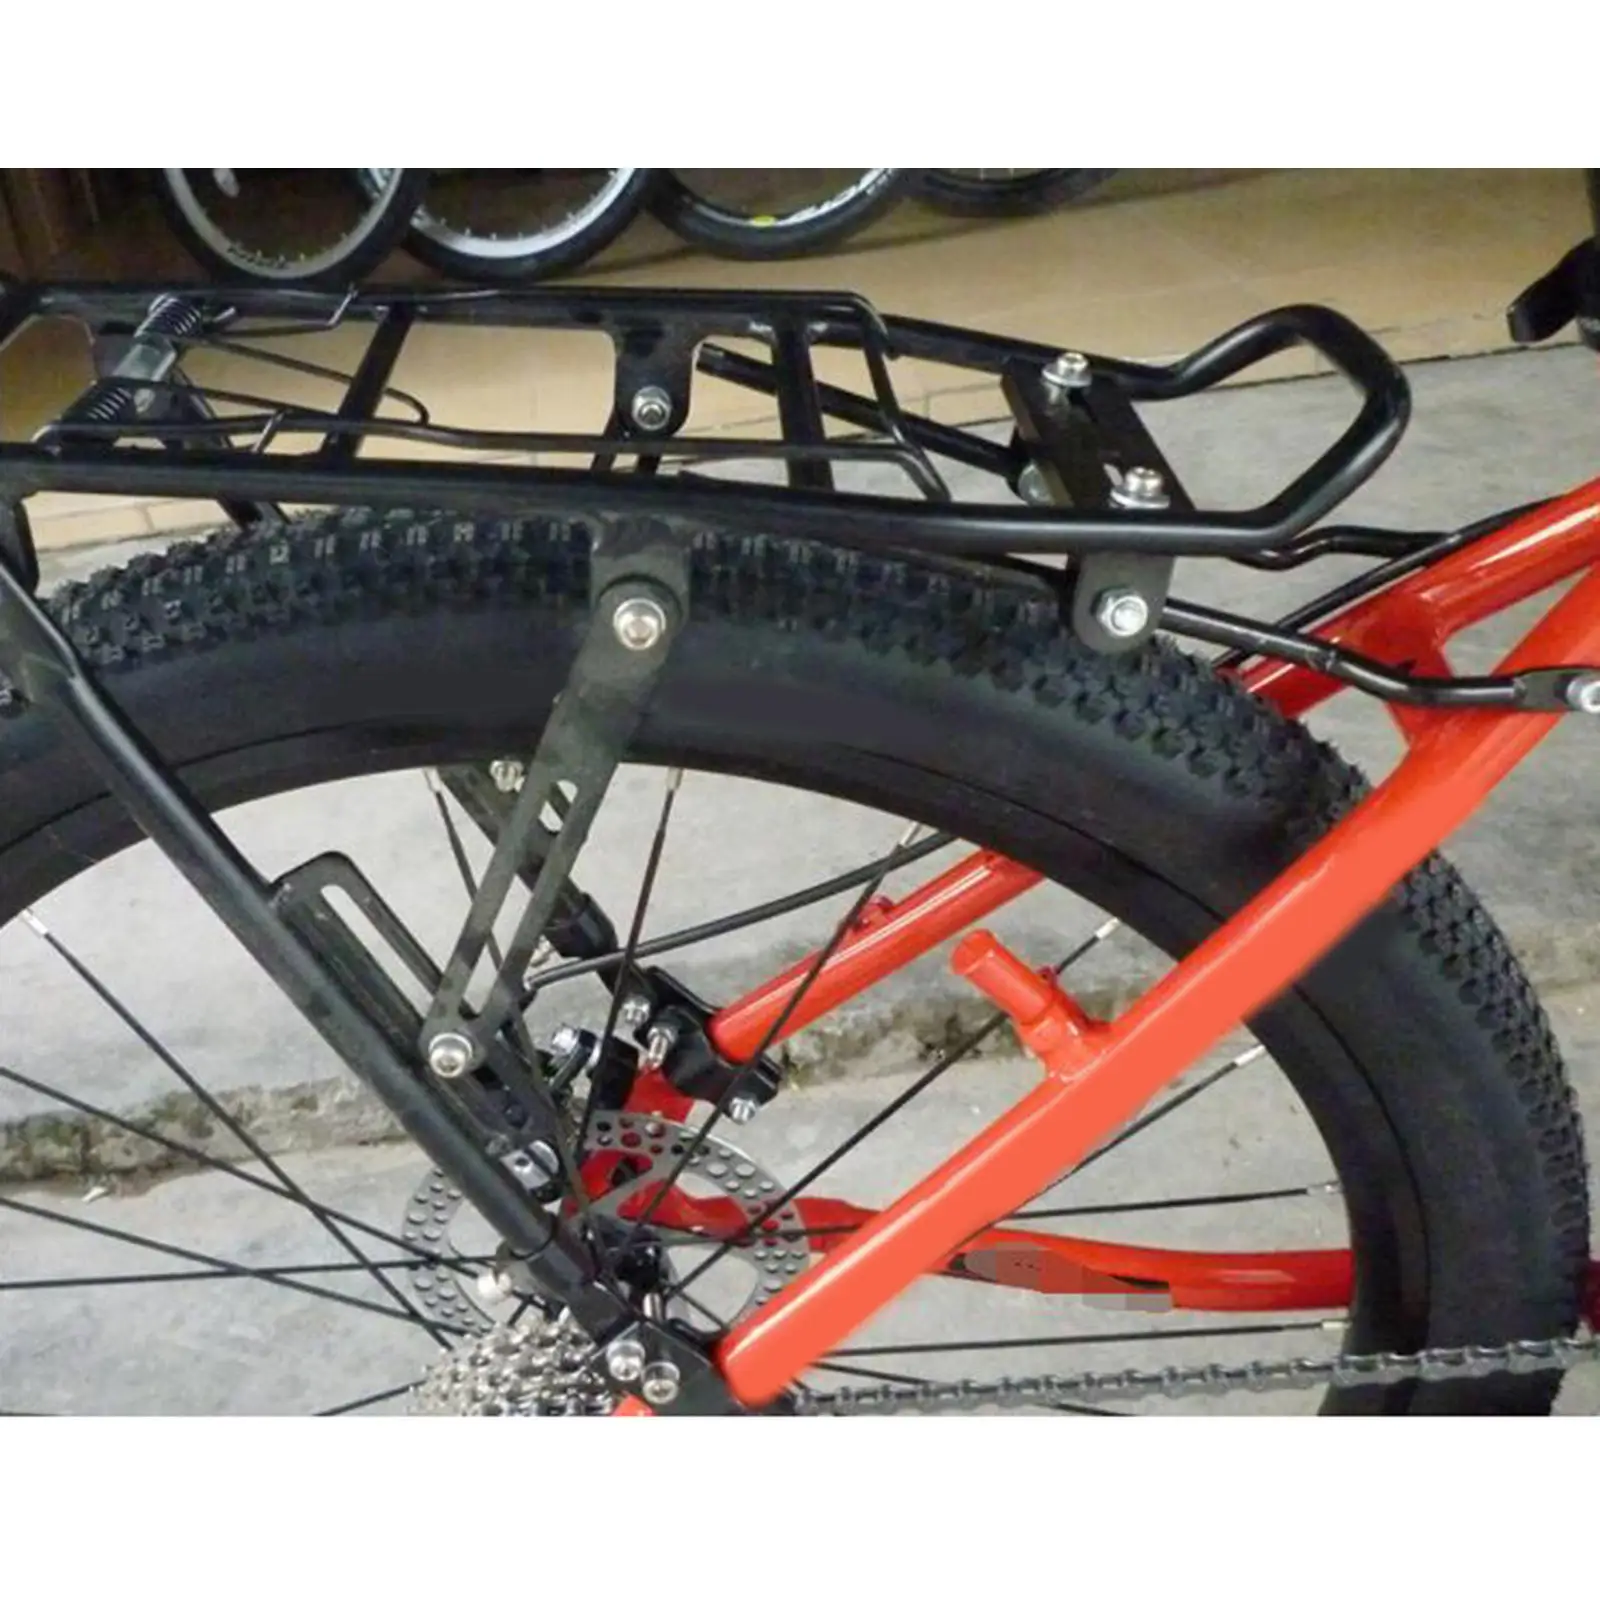 Bicycle Rear Cargo Bike Touring Load Rack Shelf Racks Shelf Tailstock Equipment Suitable For 24